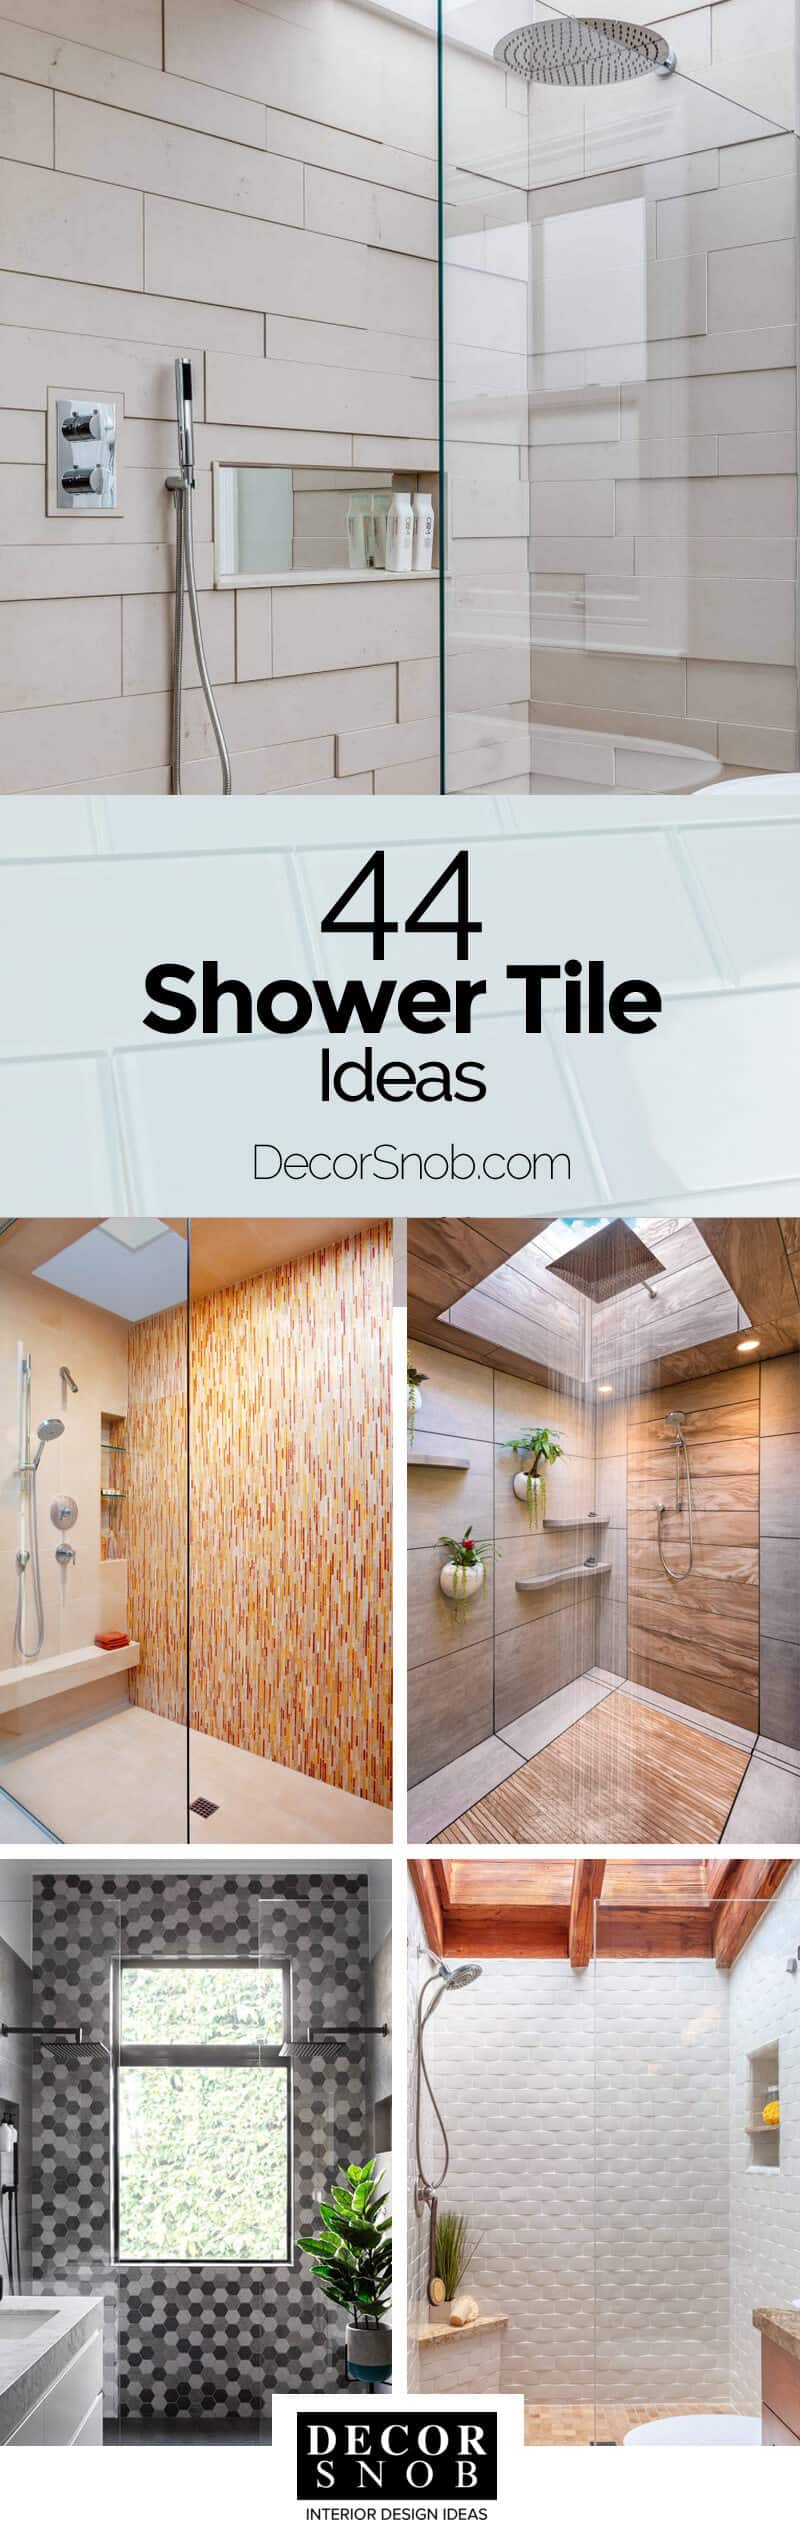 44 Modern Shower Tile Ideas And Designs, Ceramic Tile Shower Ideas Small Bathrooms